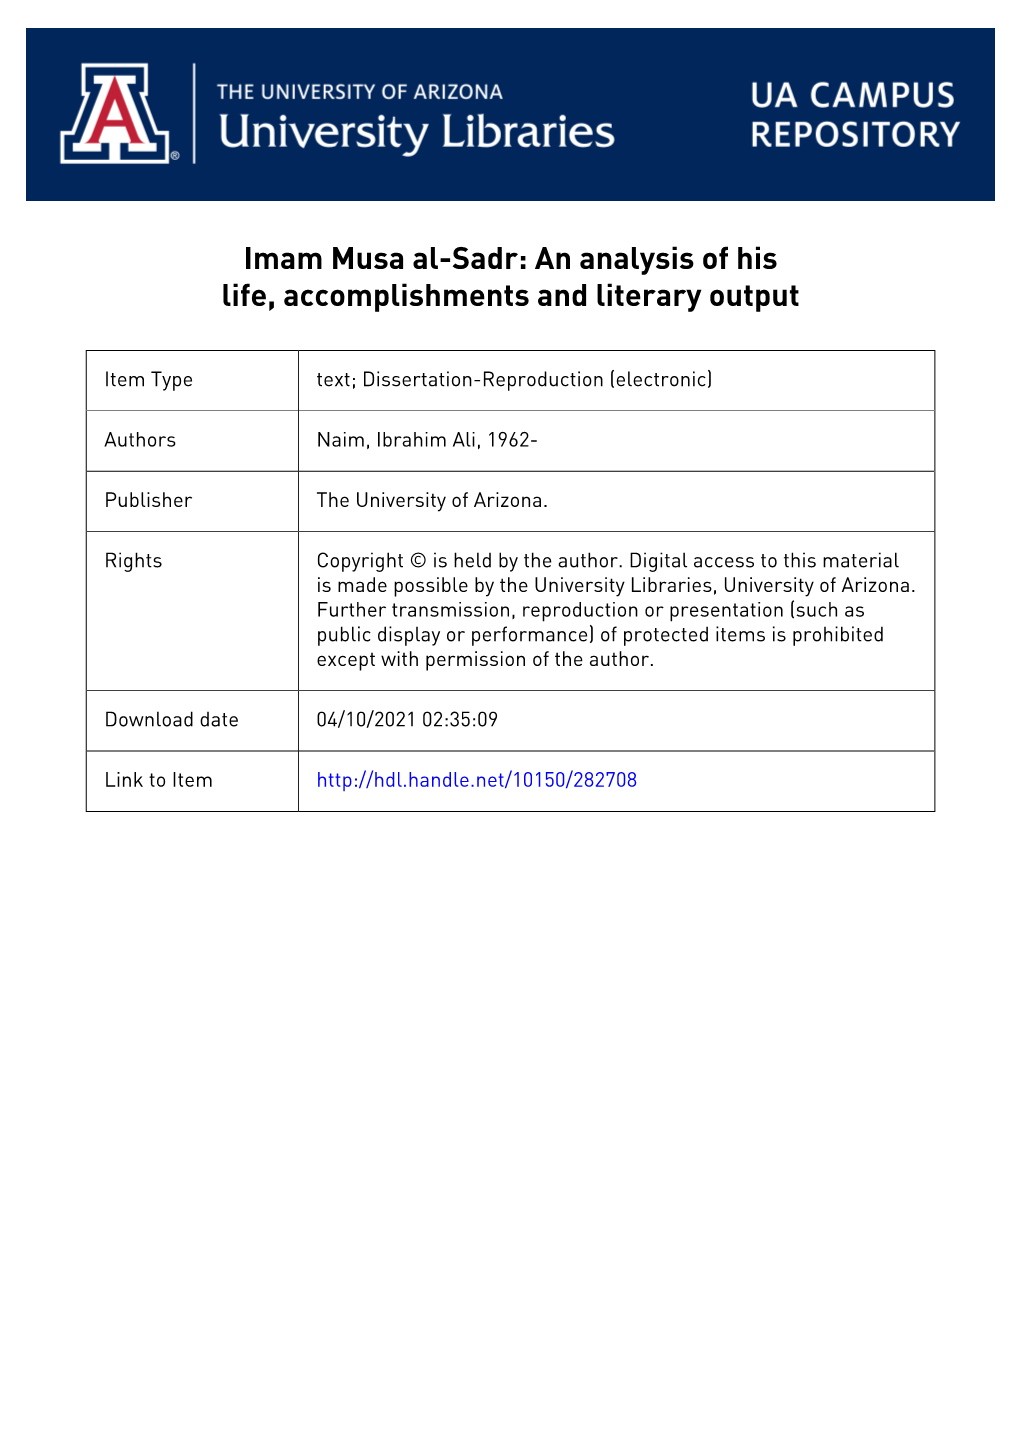 Imam Musa Al-Sadr: an Analysis of His Life, Accomplishments and Literary Output